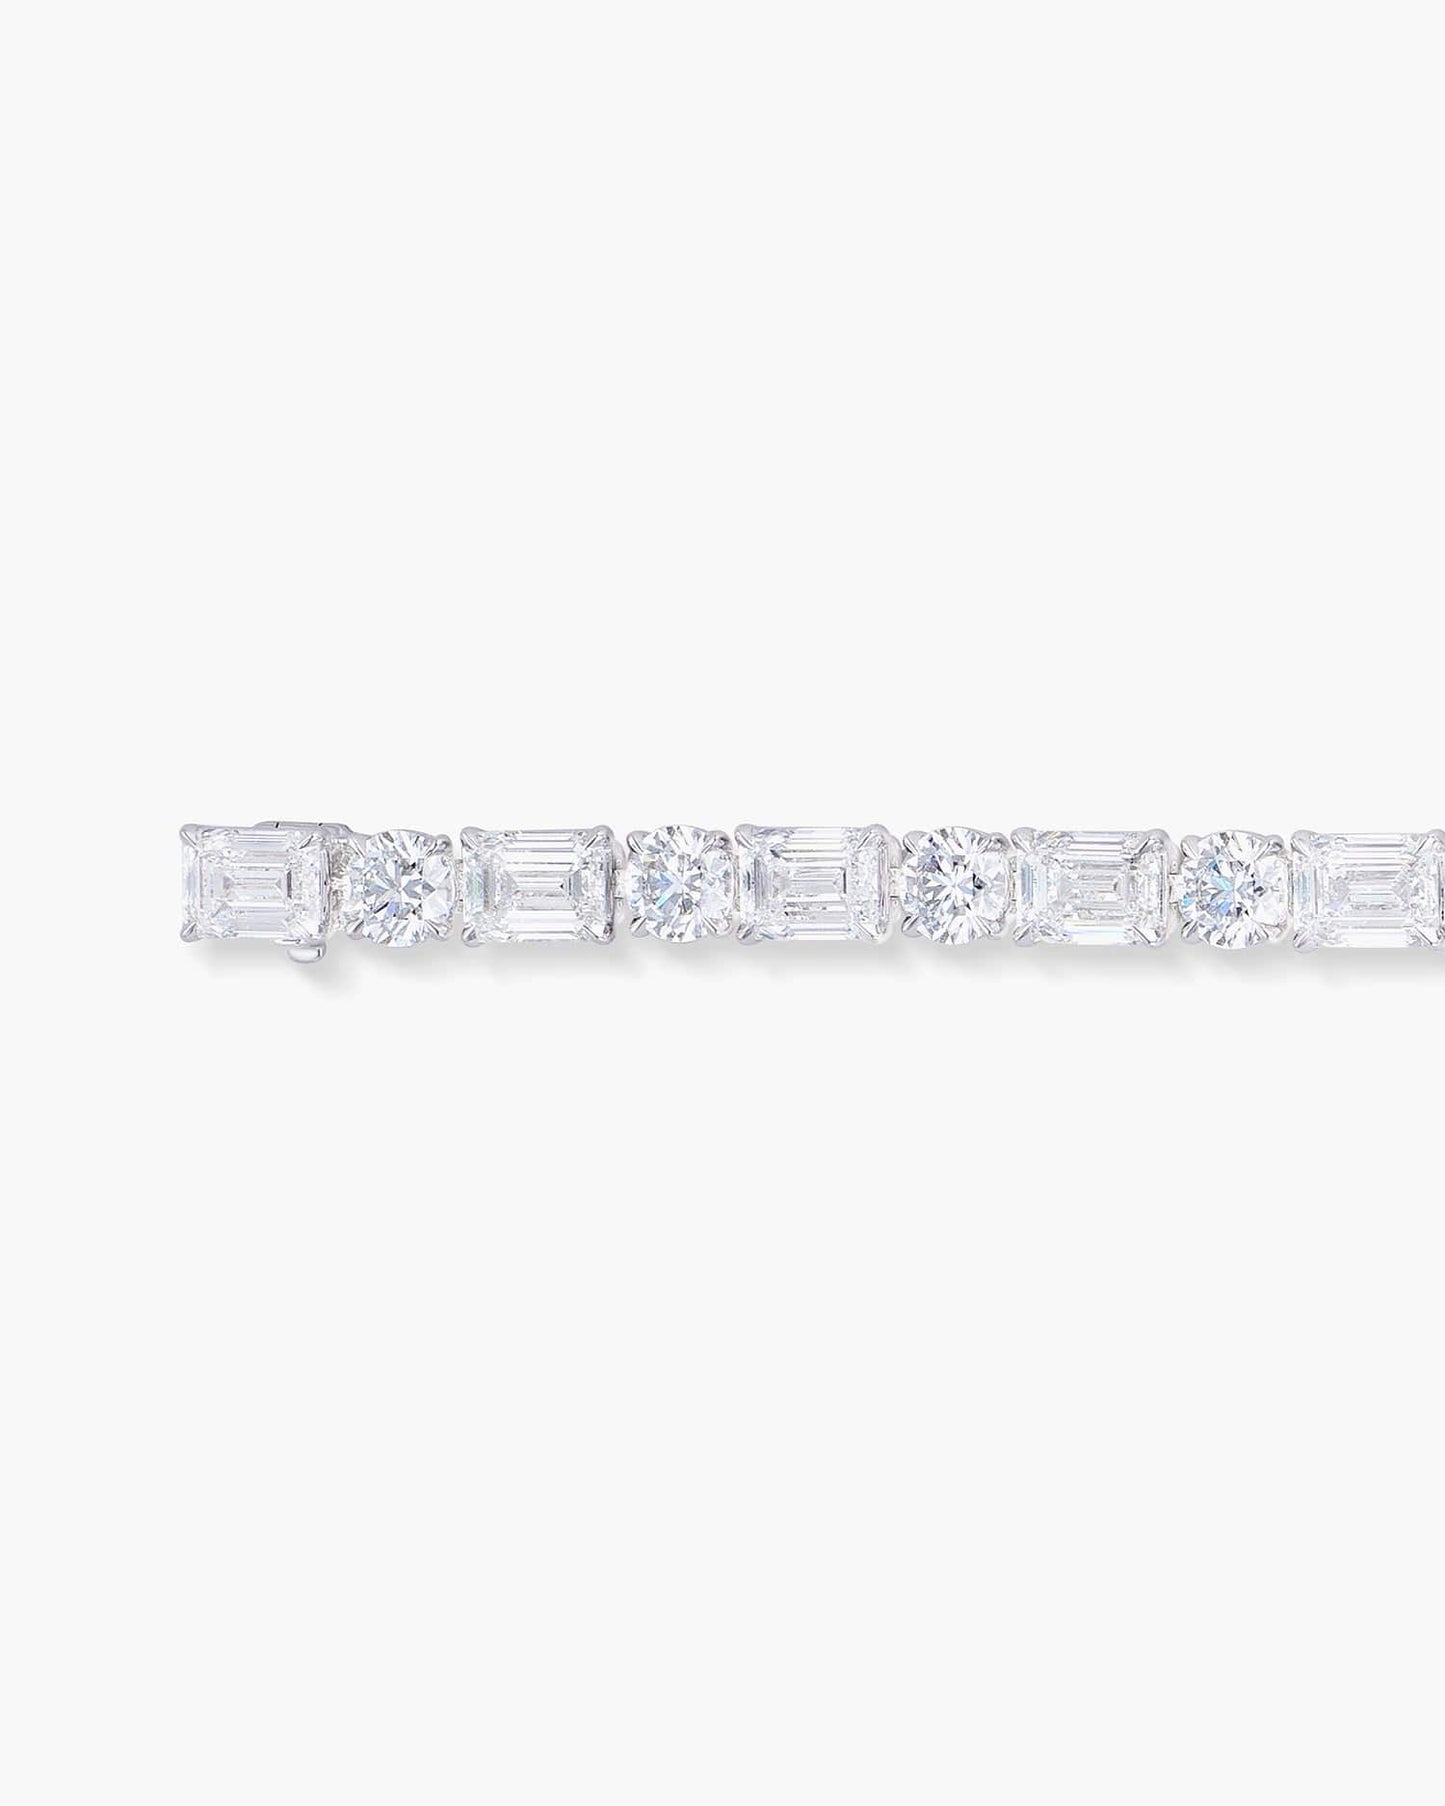 Emerald Cut and Round Brilliant Cut Diamond Bracelet (1.00 carat)